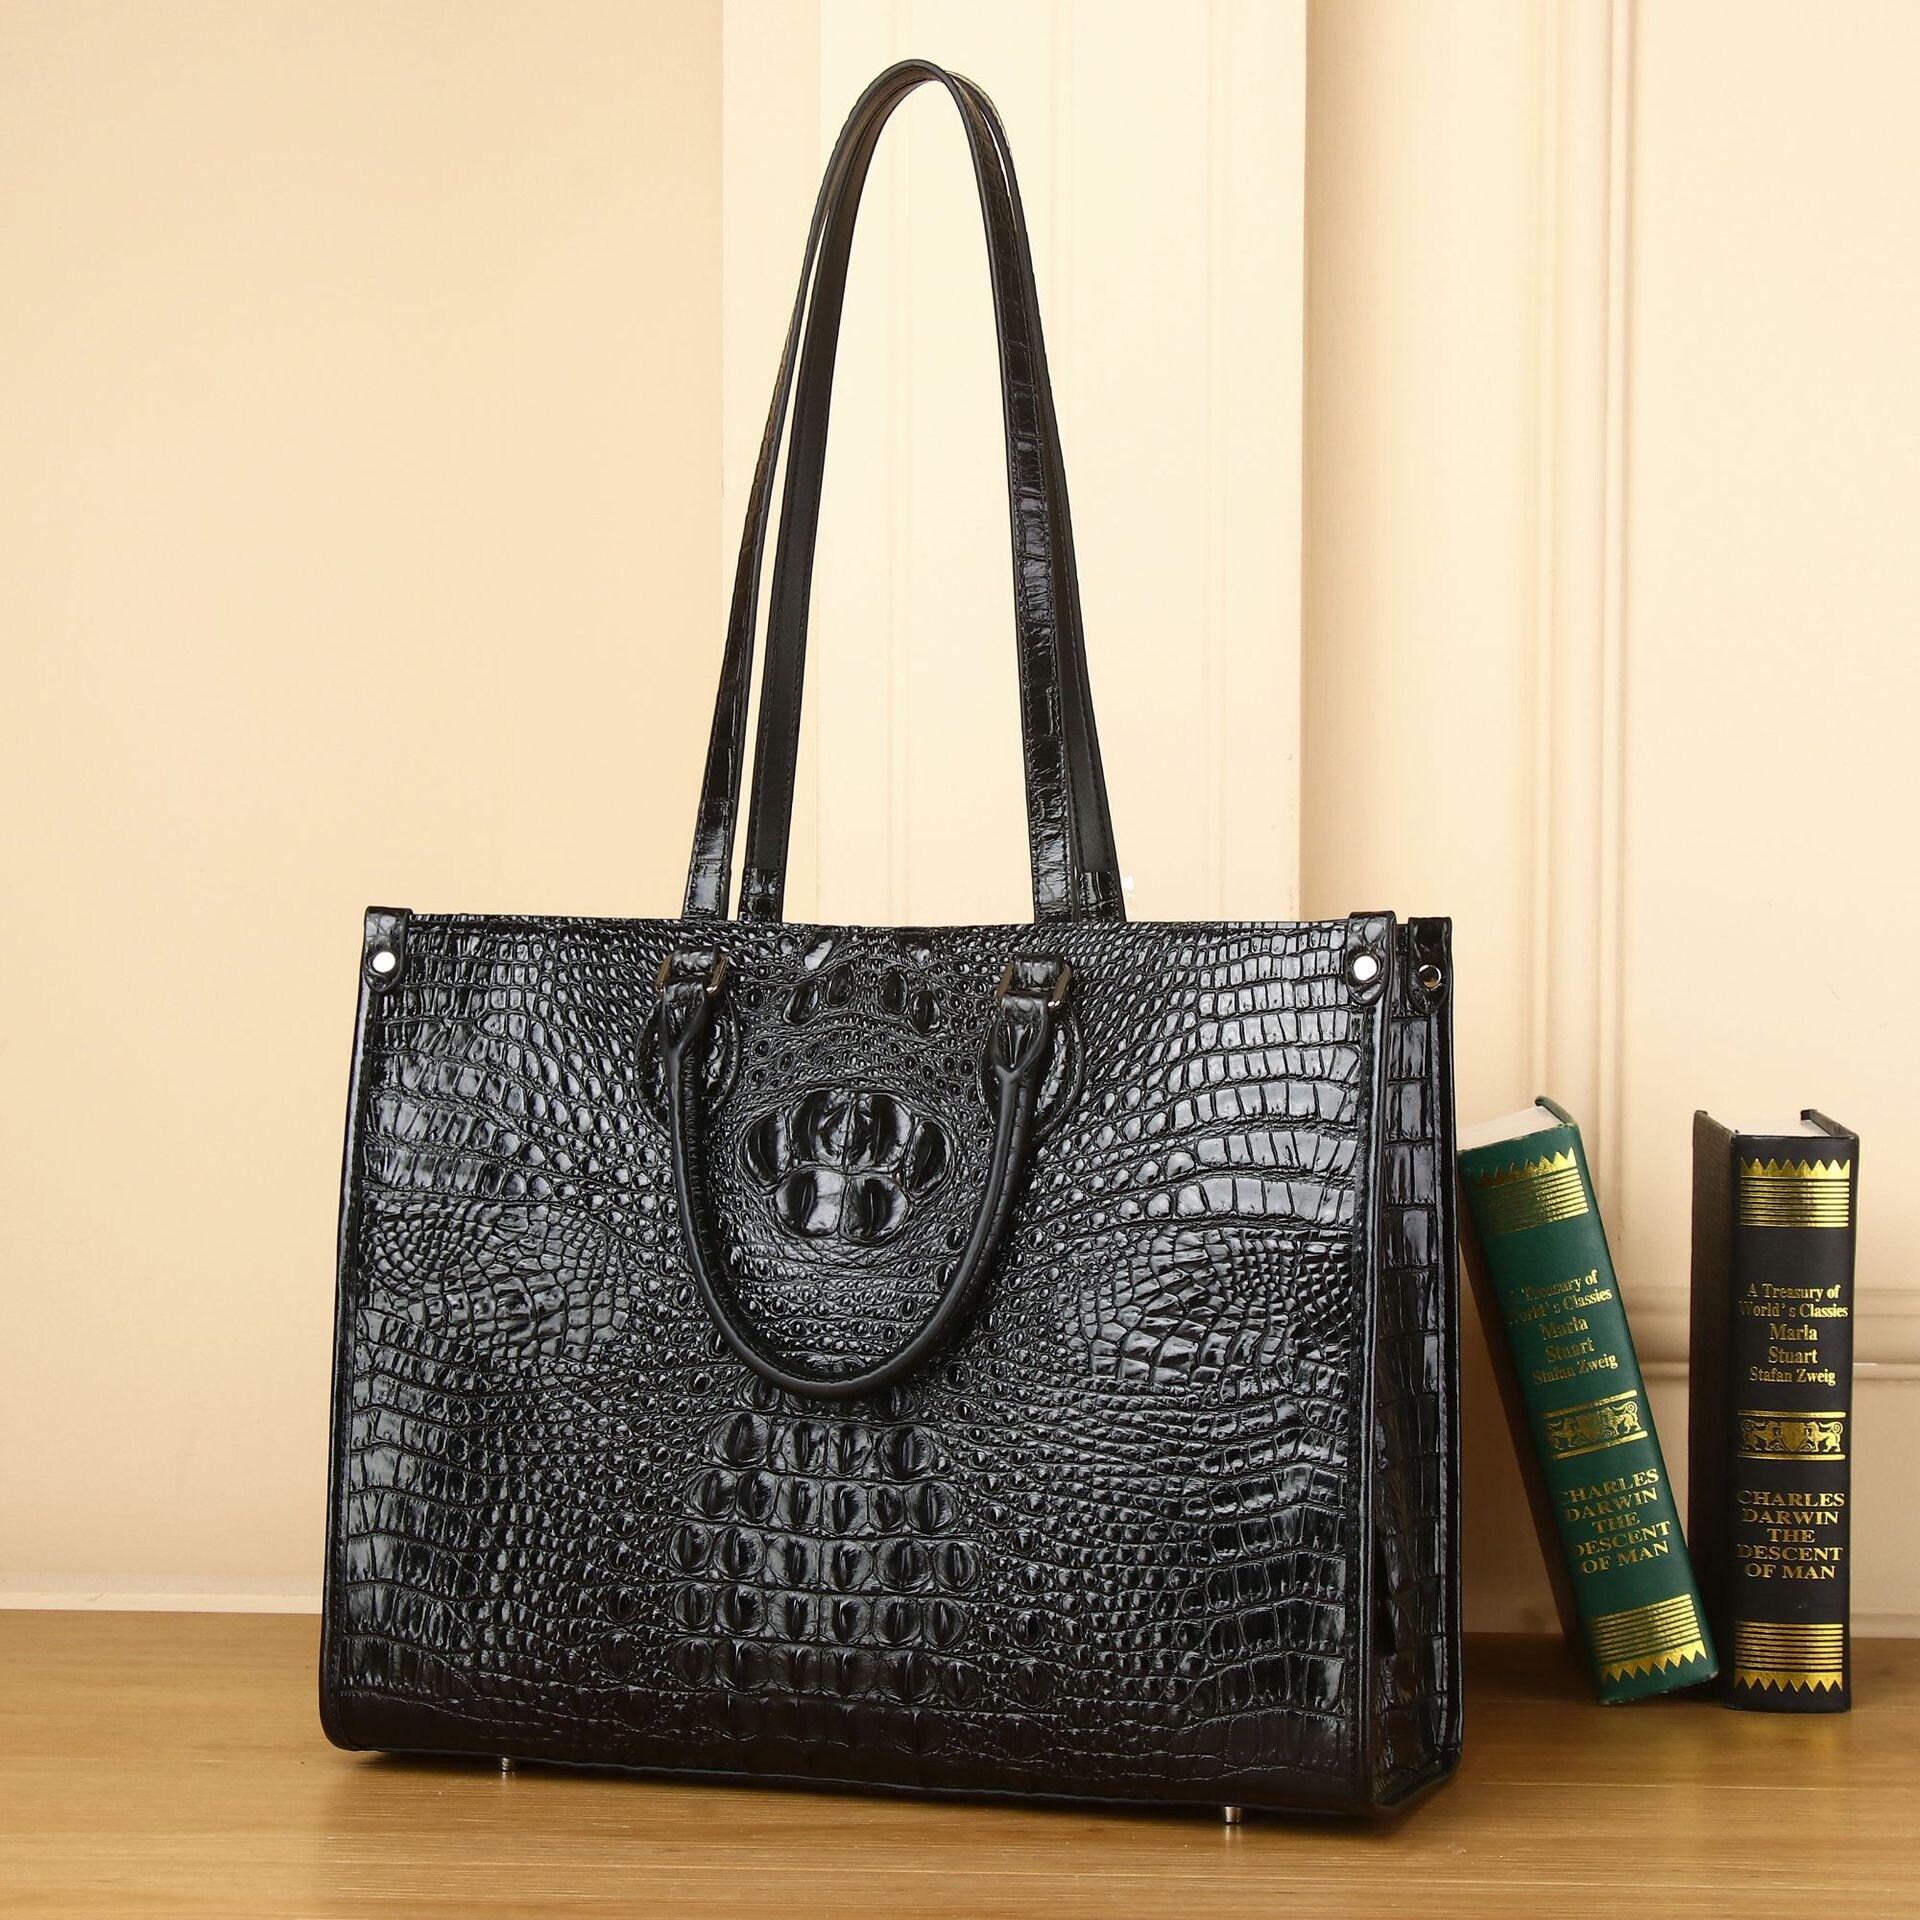 Designer Leather Tote Handbag: Black & White by Bobby Schandra